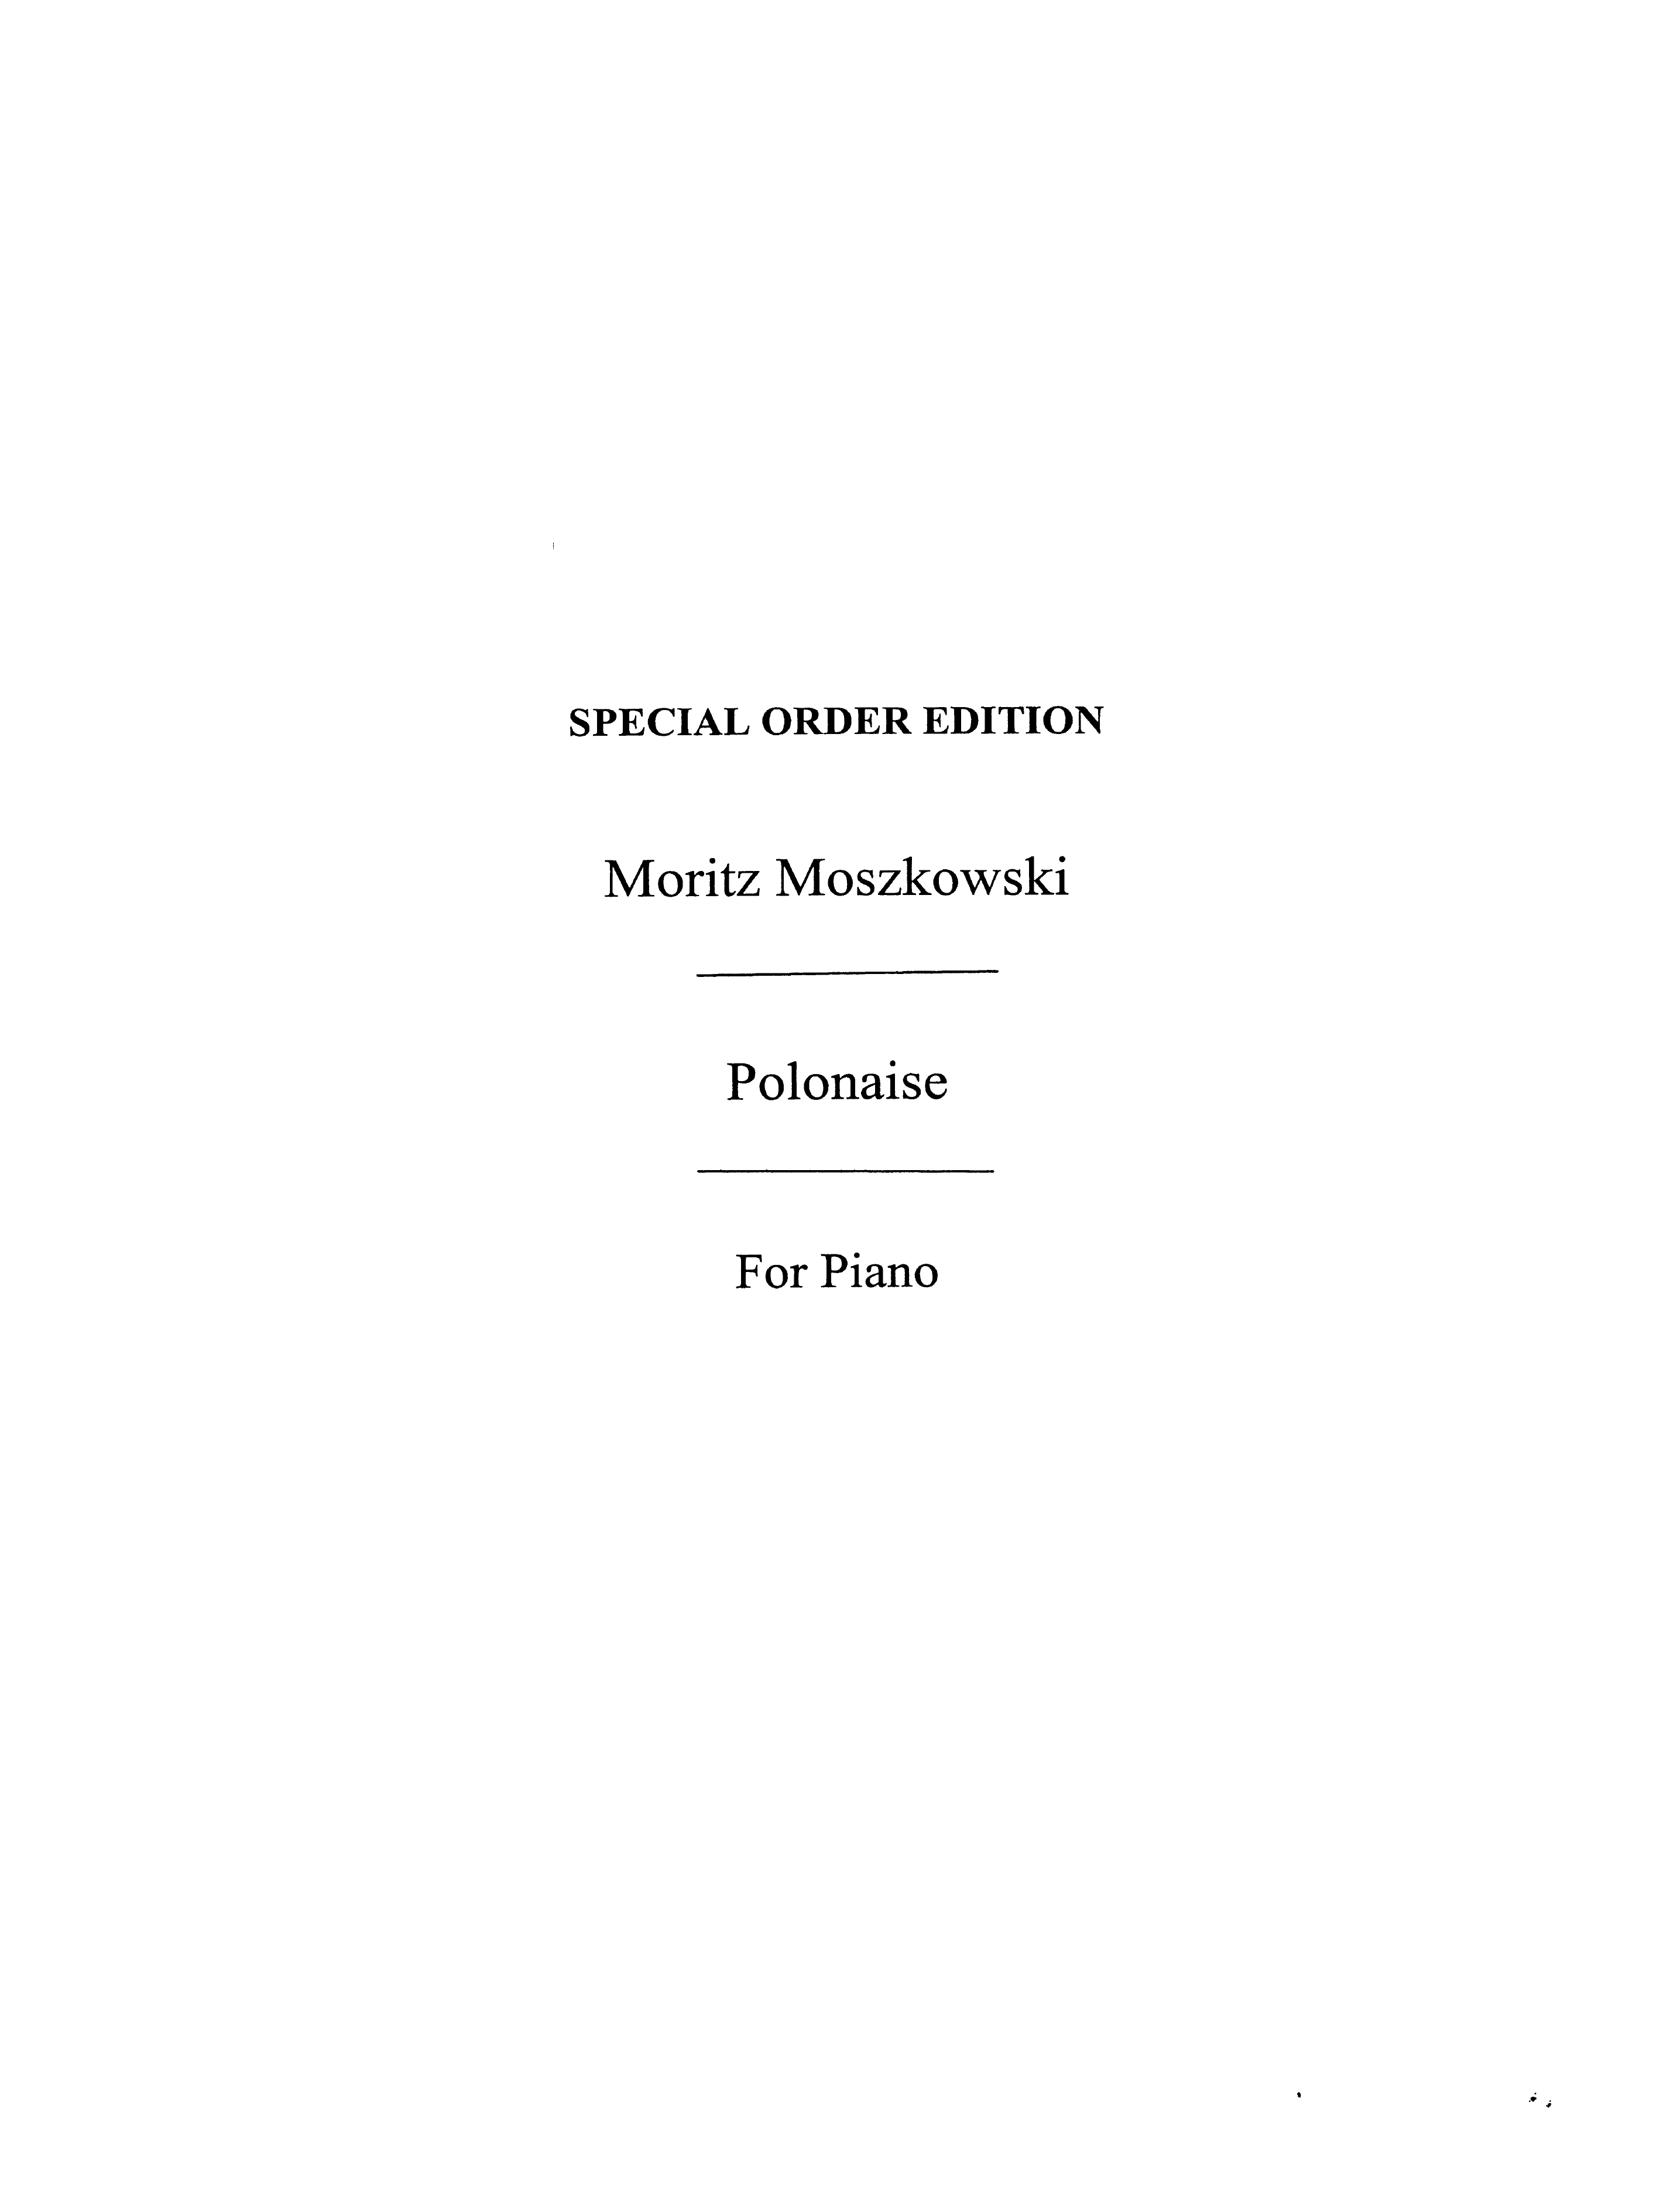 Moszkowski, M Polonaise Op.11 Pf